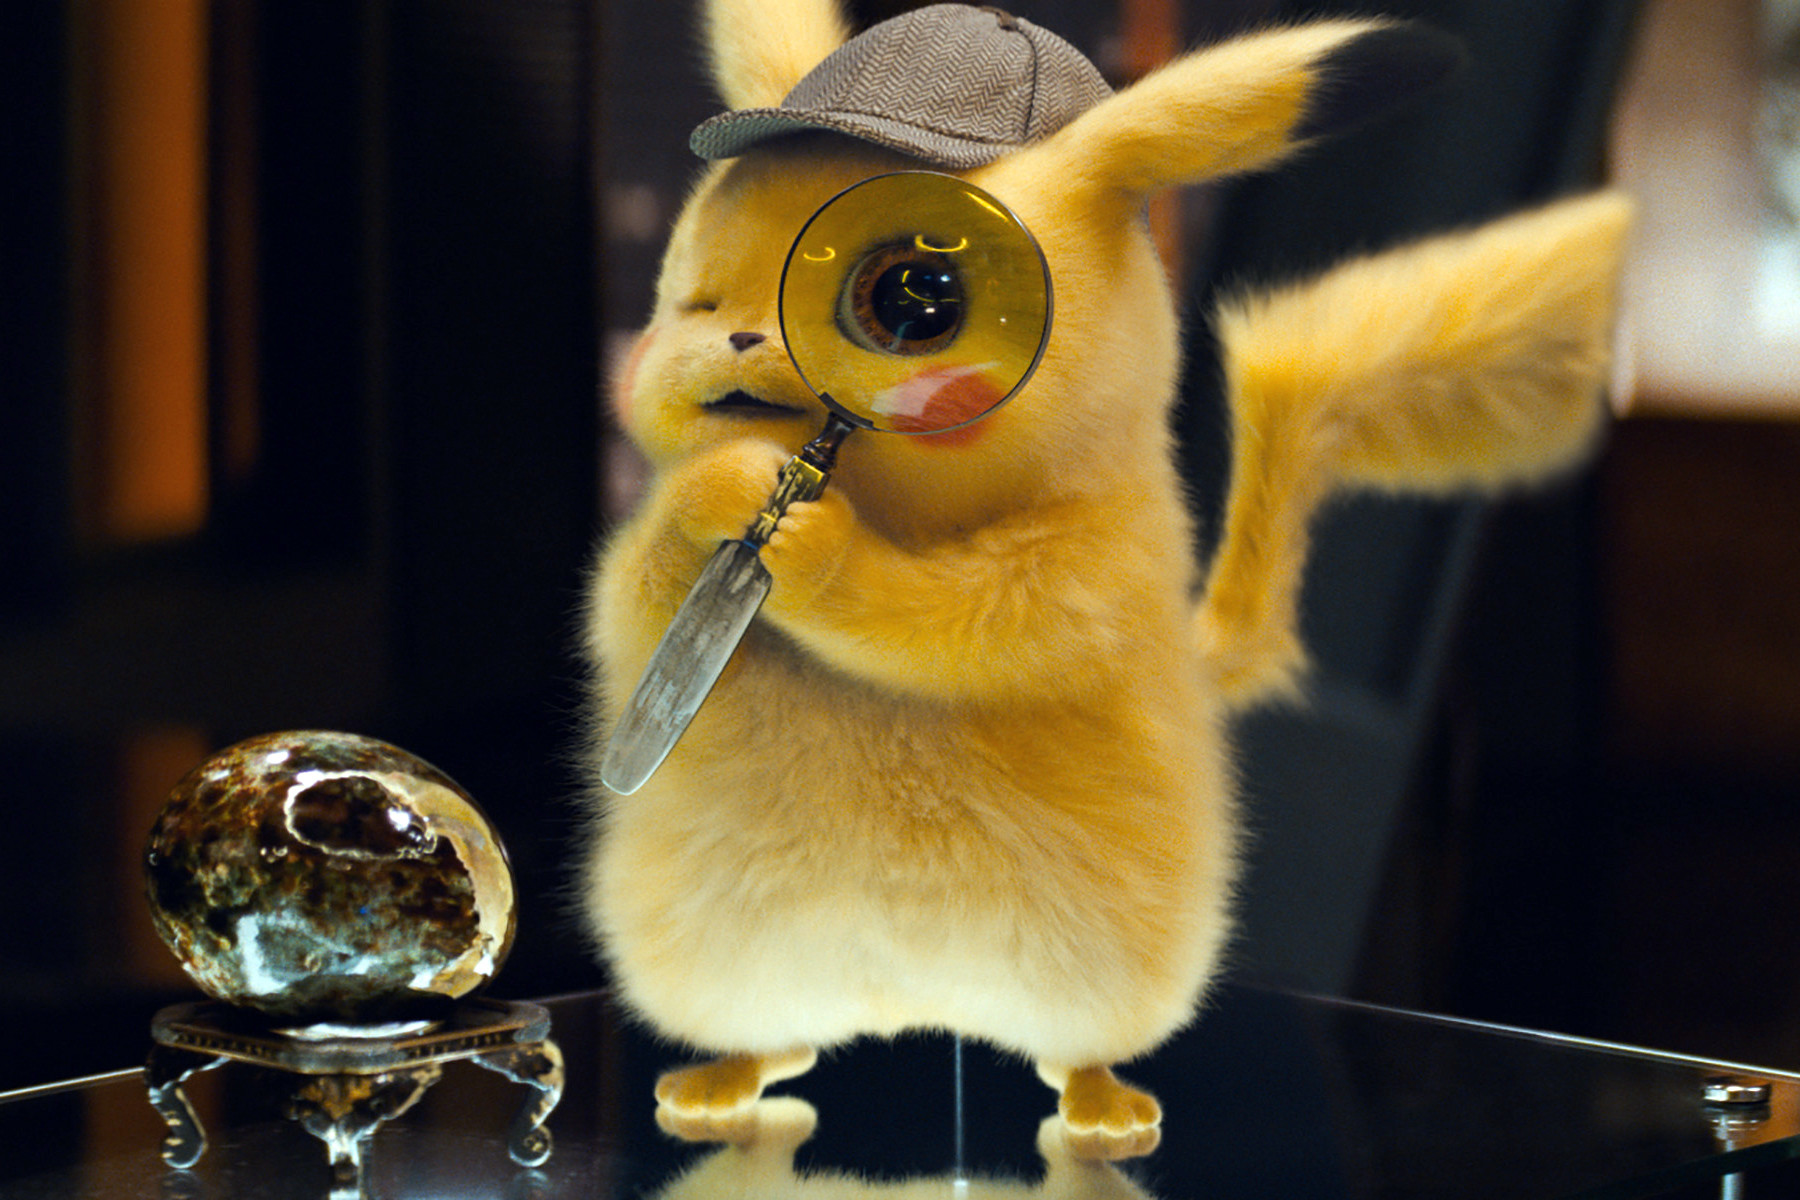 detective pikachu 1